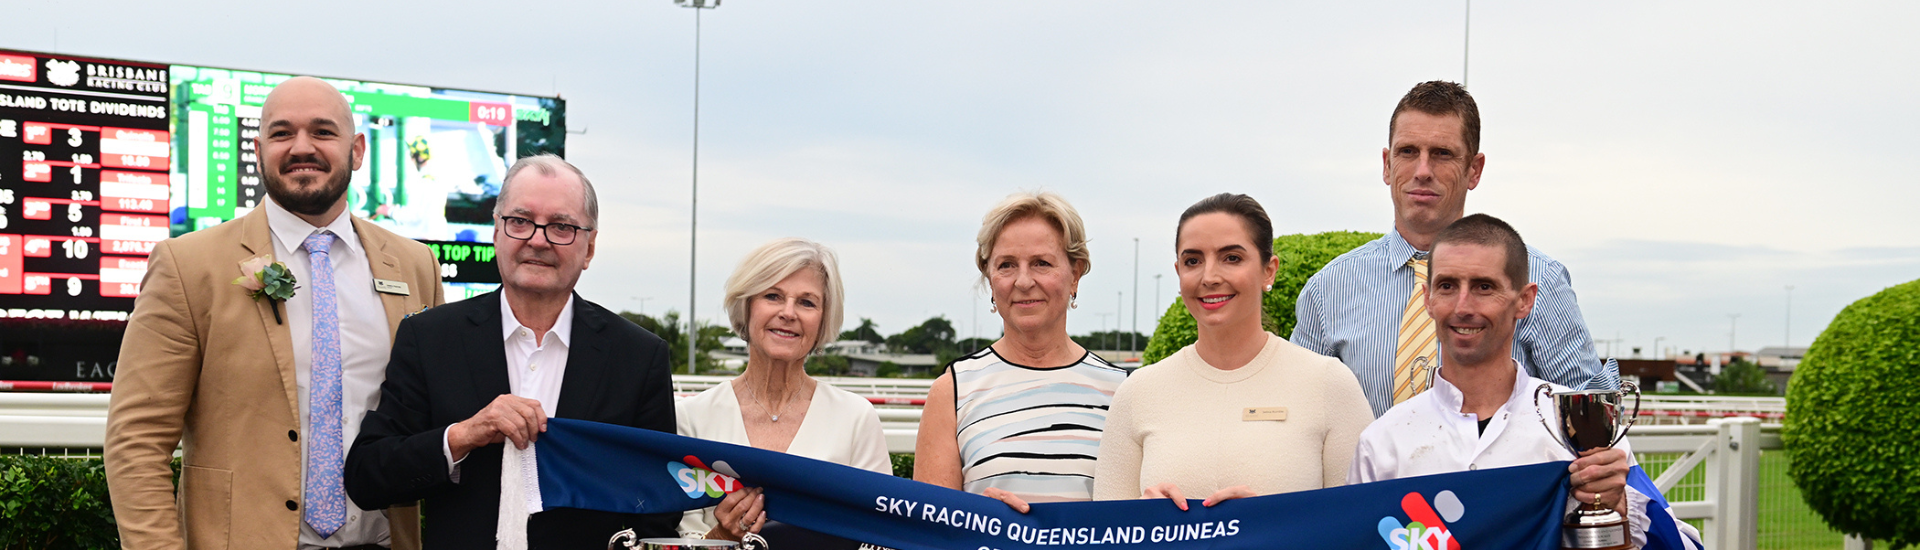 nominations-set-the-scene-for-best-stradbroke-season-yet-kovalica-latest-news-web-banner | Brisbane Racing Club